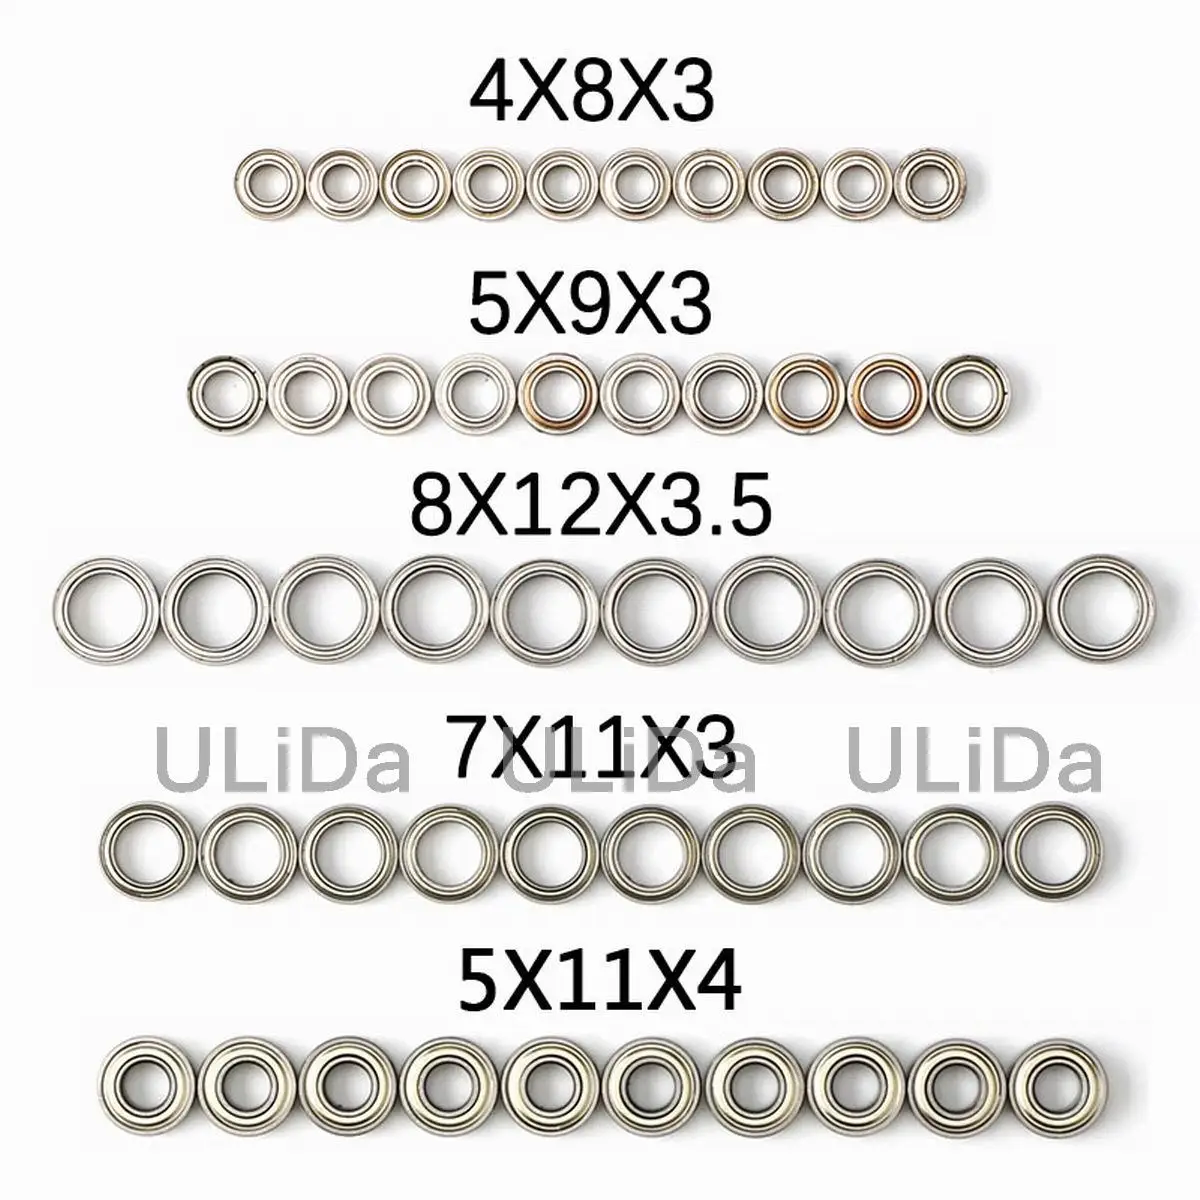 10PCS Ball Bearing 5x11x4 7x11x3 8x12x3.5 9x5x3 4x8x3mm For 1:12 RC Car Parts Wltoys 12428 12423 Upgrade Parts